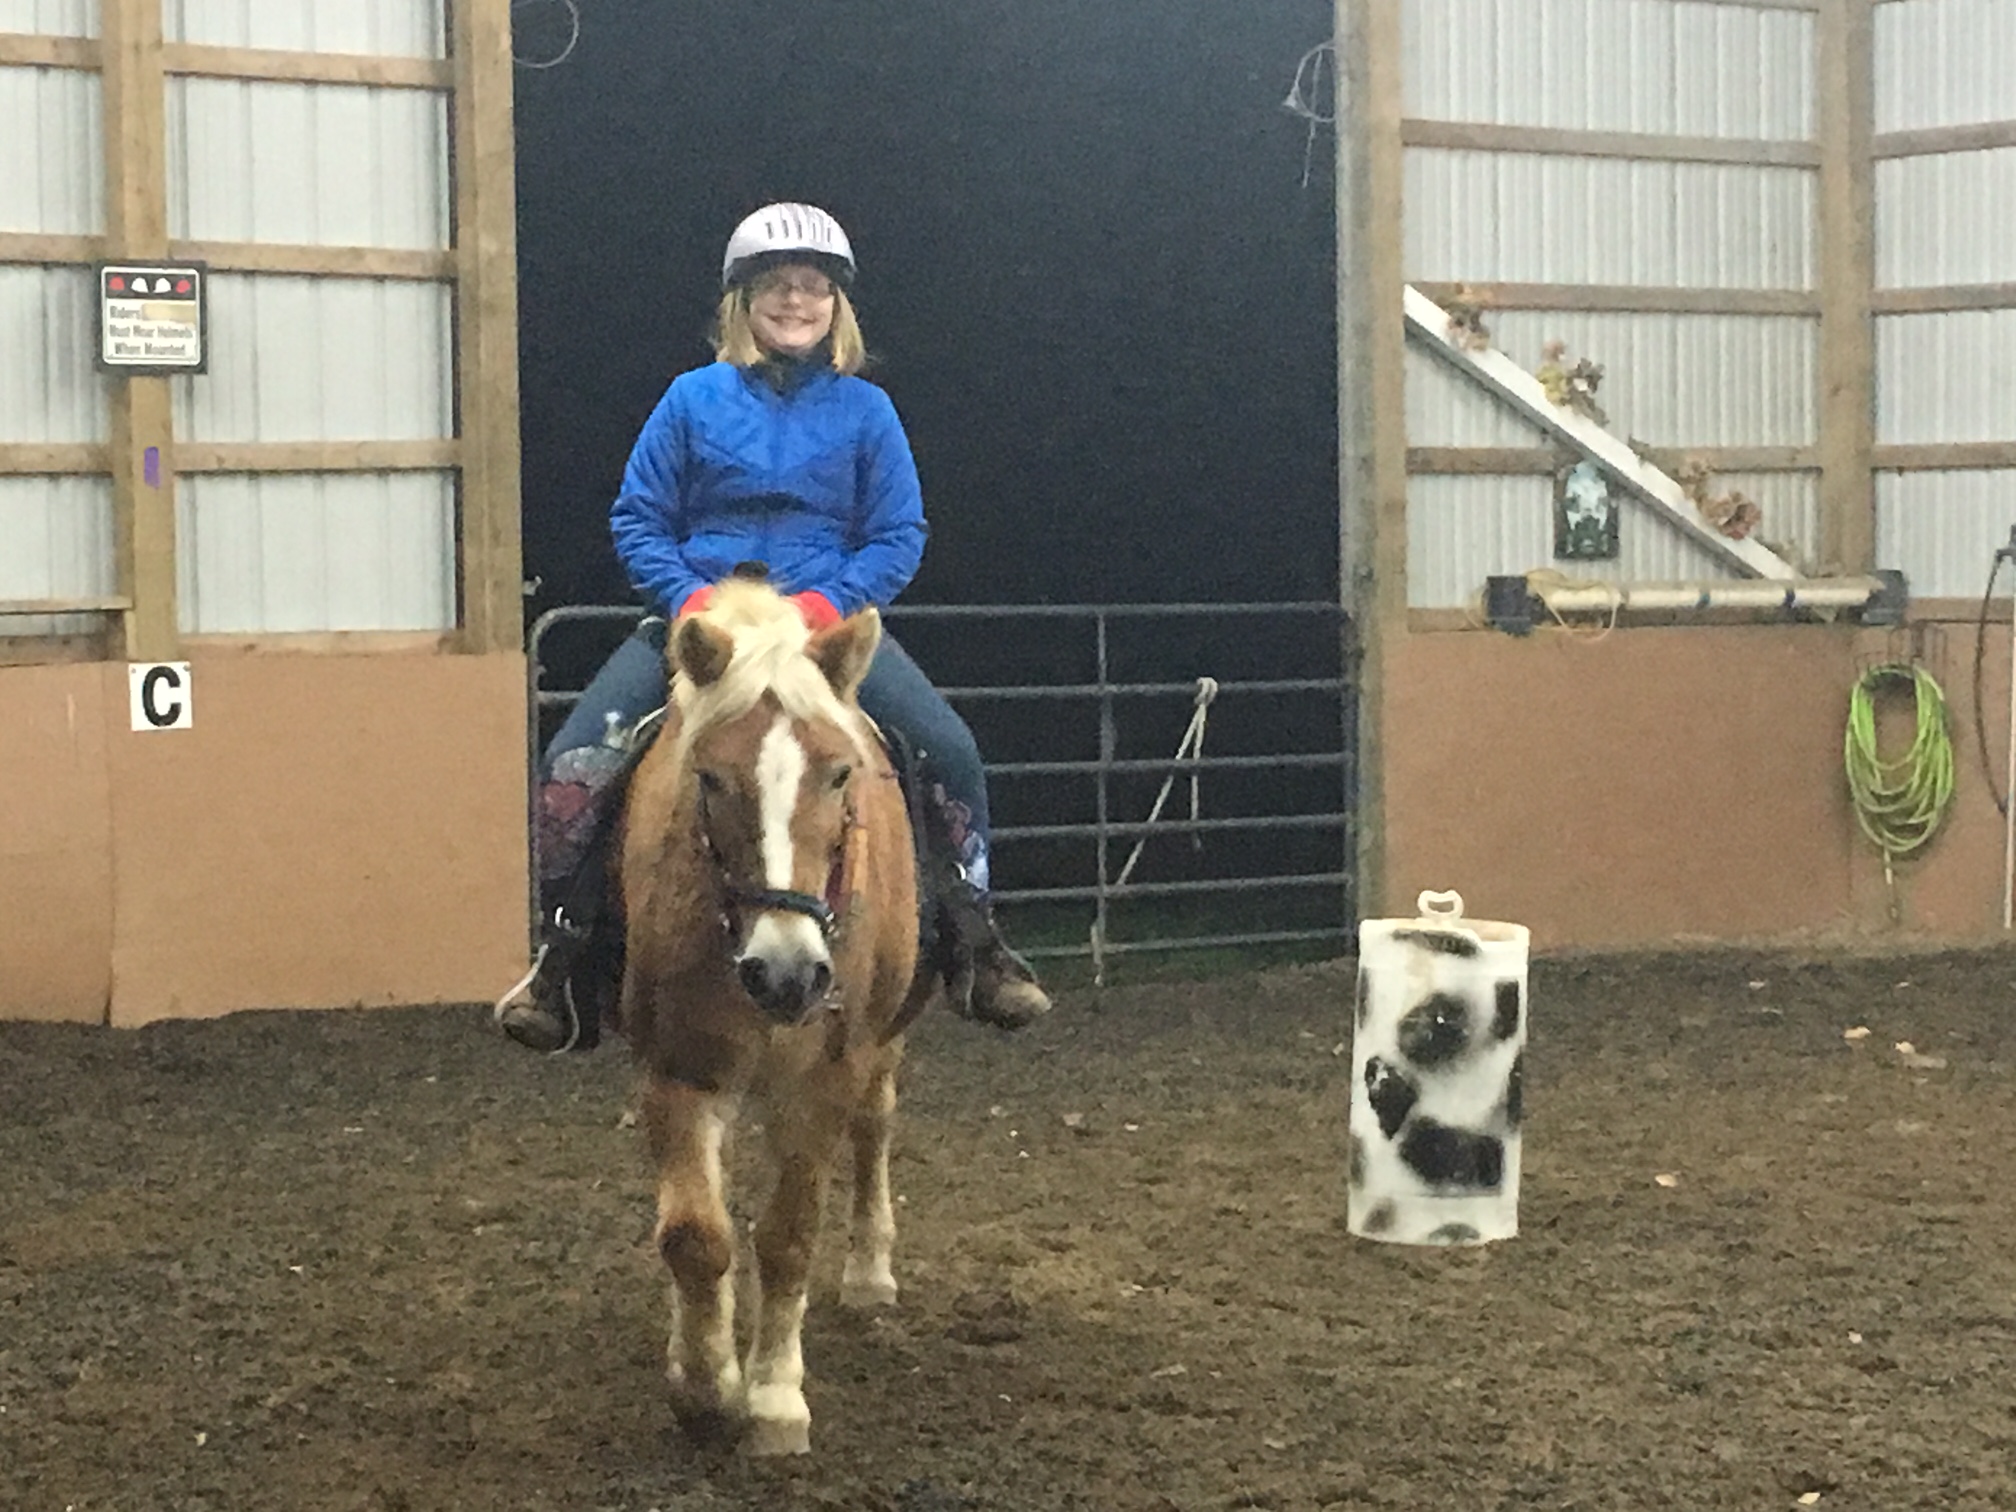 Katie riding a horse after having meningitis and hearing loss